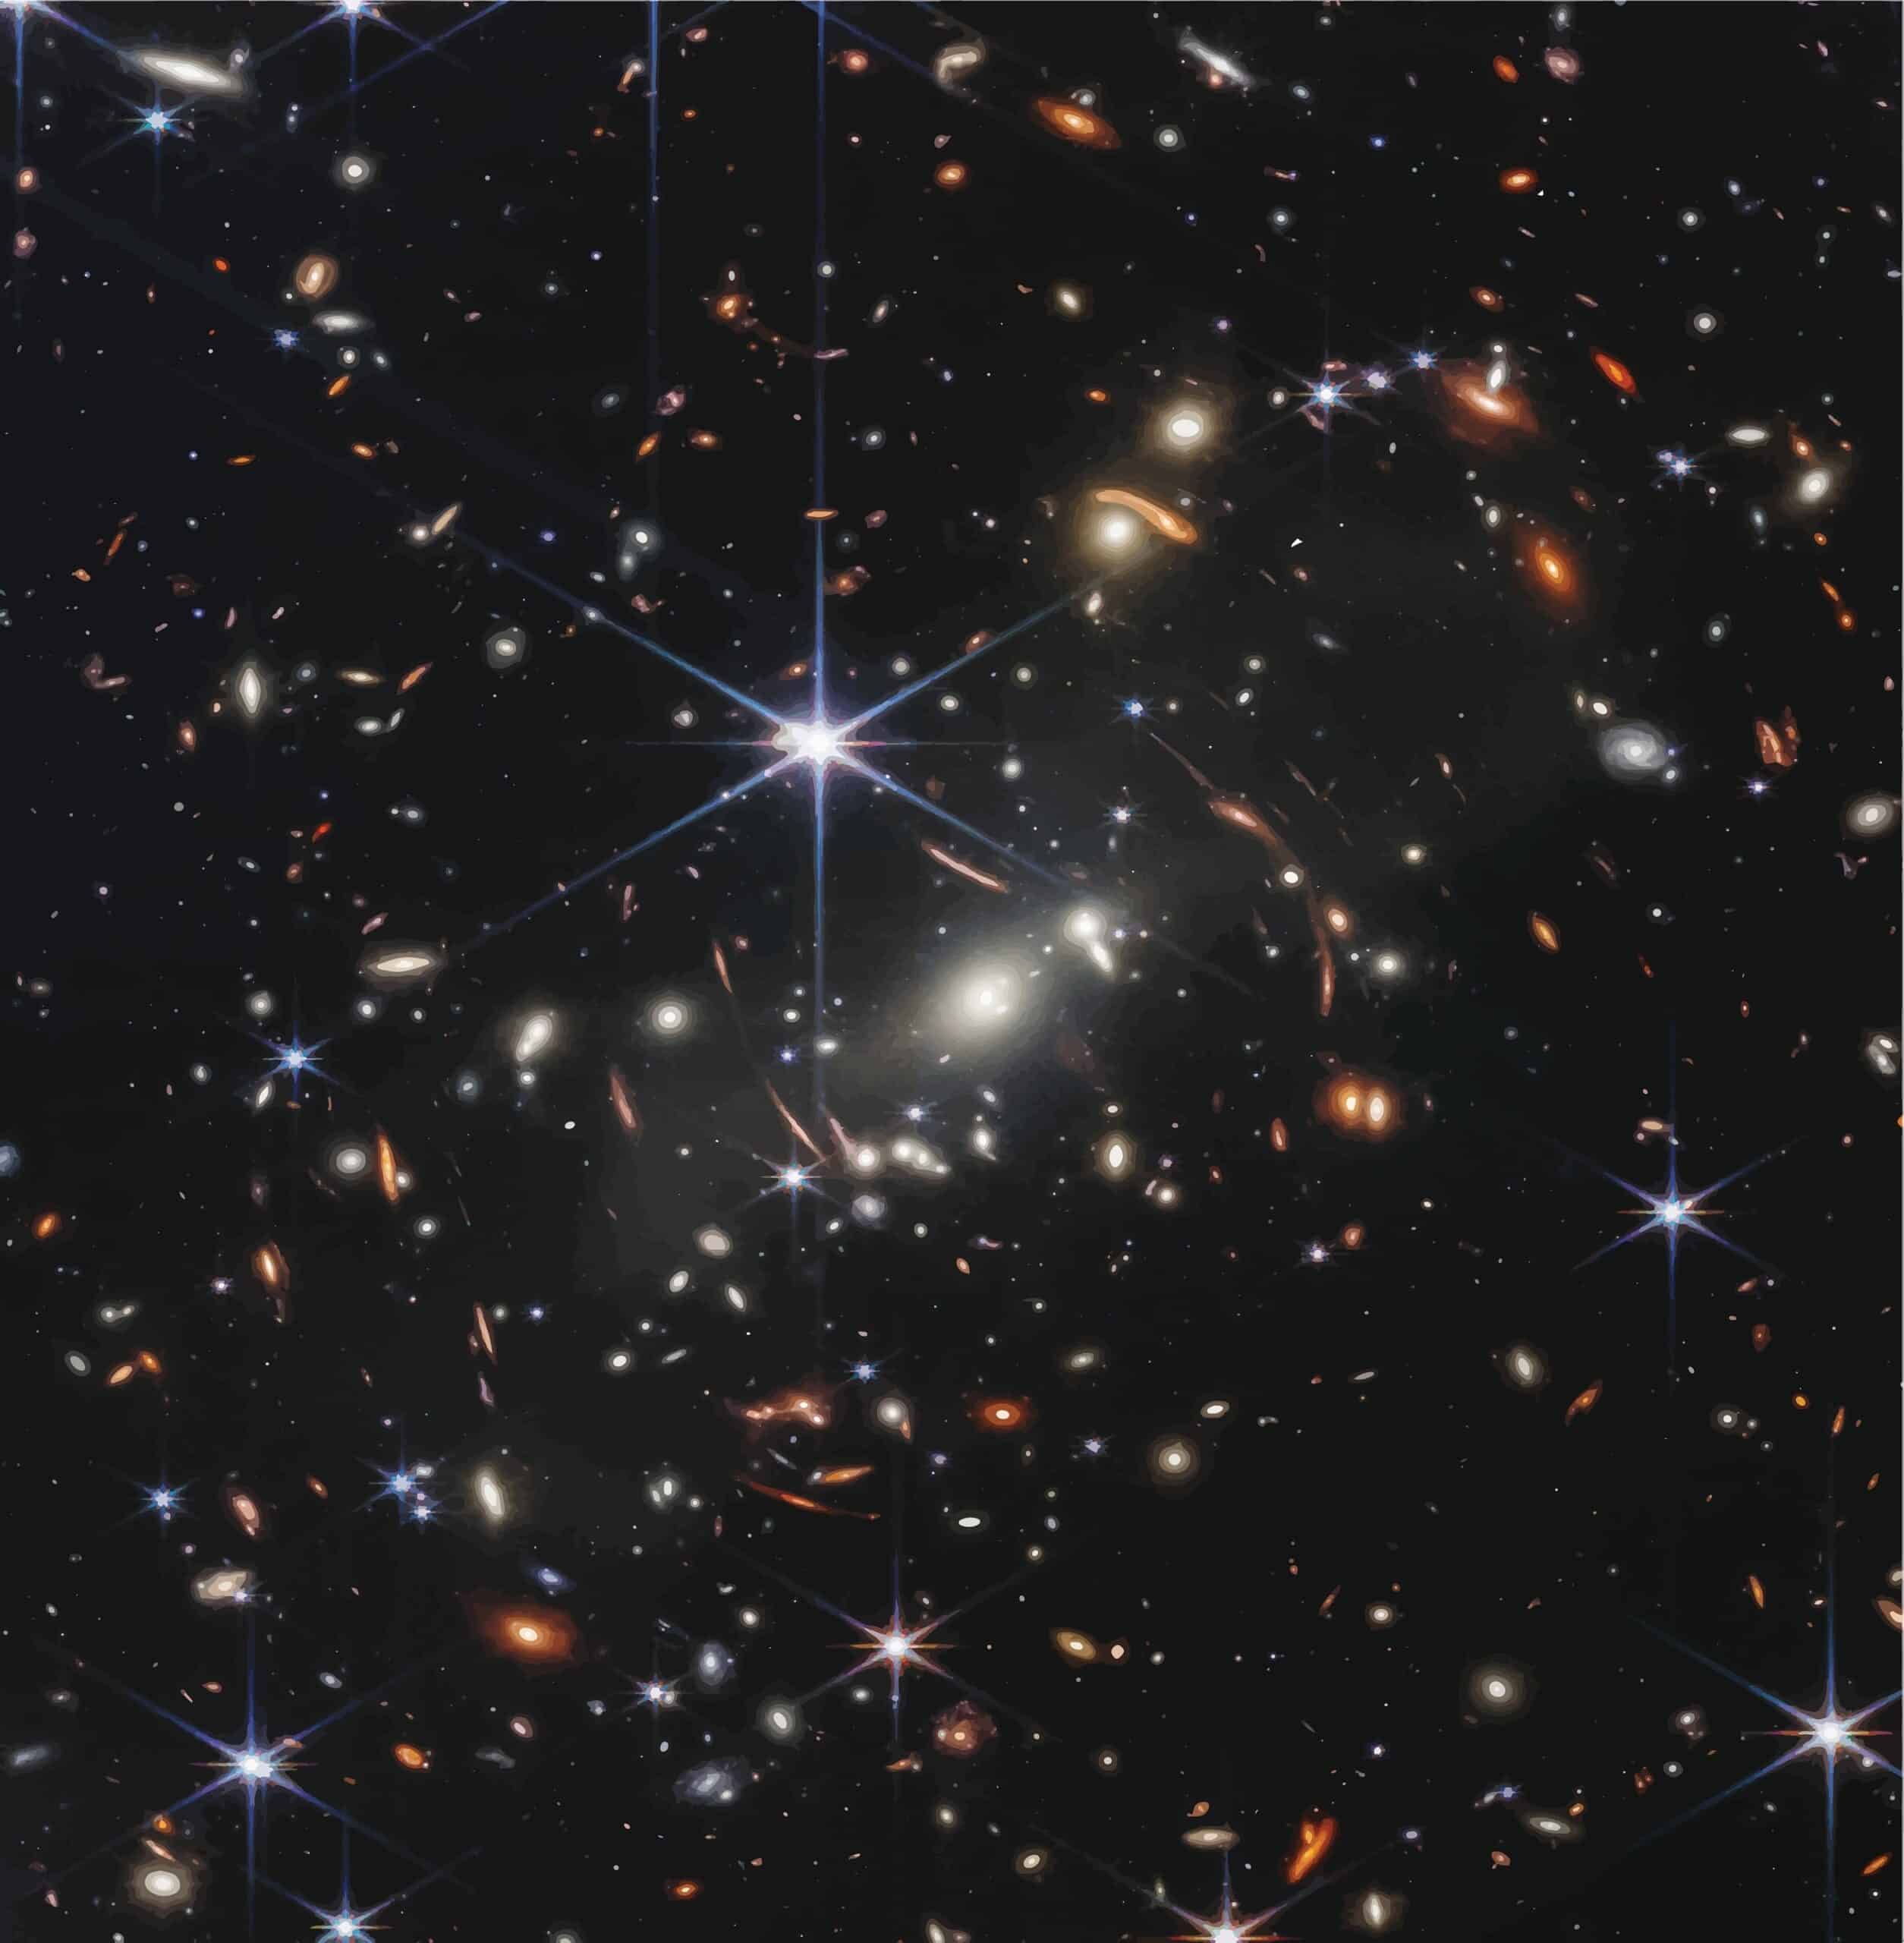 James Webb telescope space image